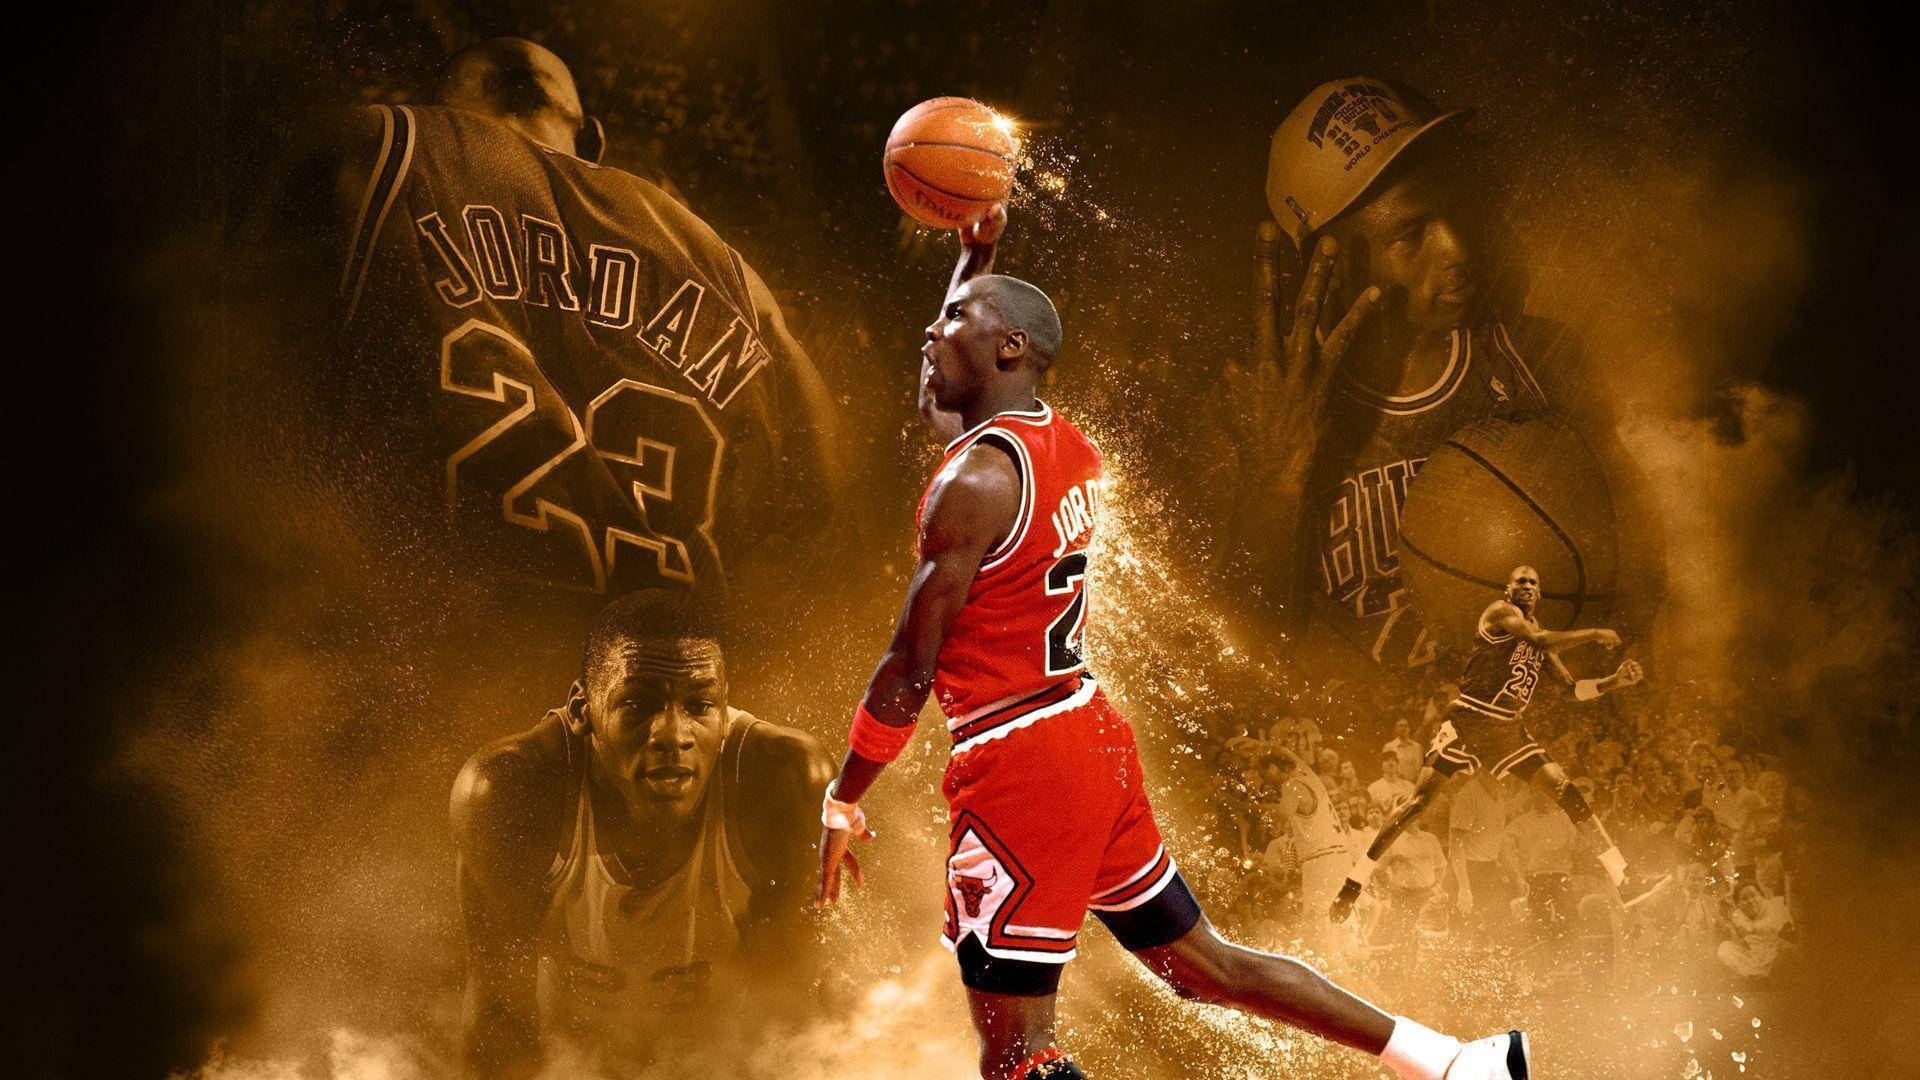 Legendariskatlet, #23 Michael Jordan. Wallpaper